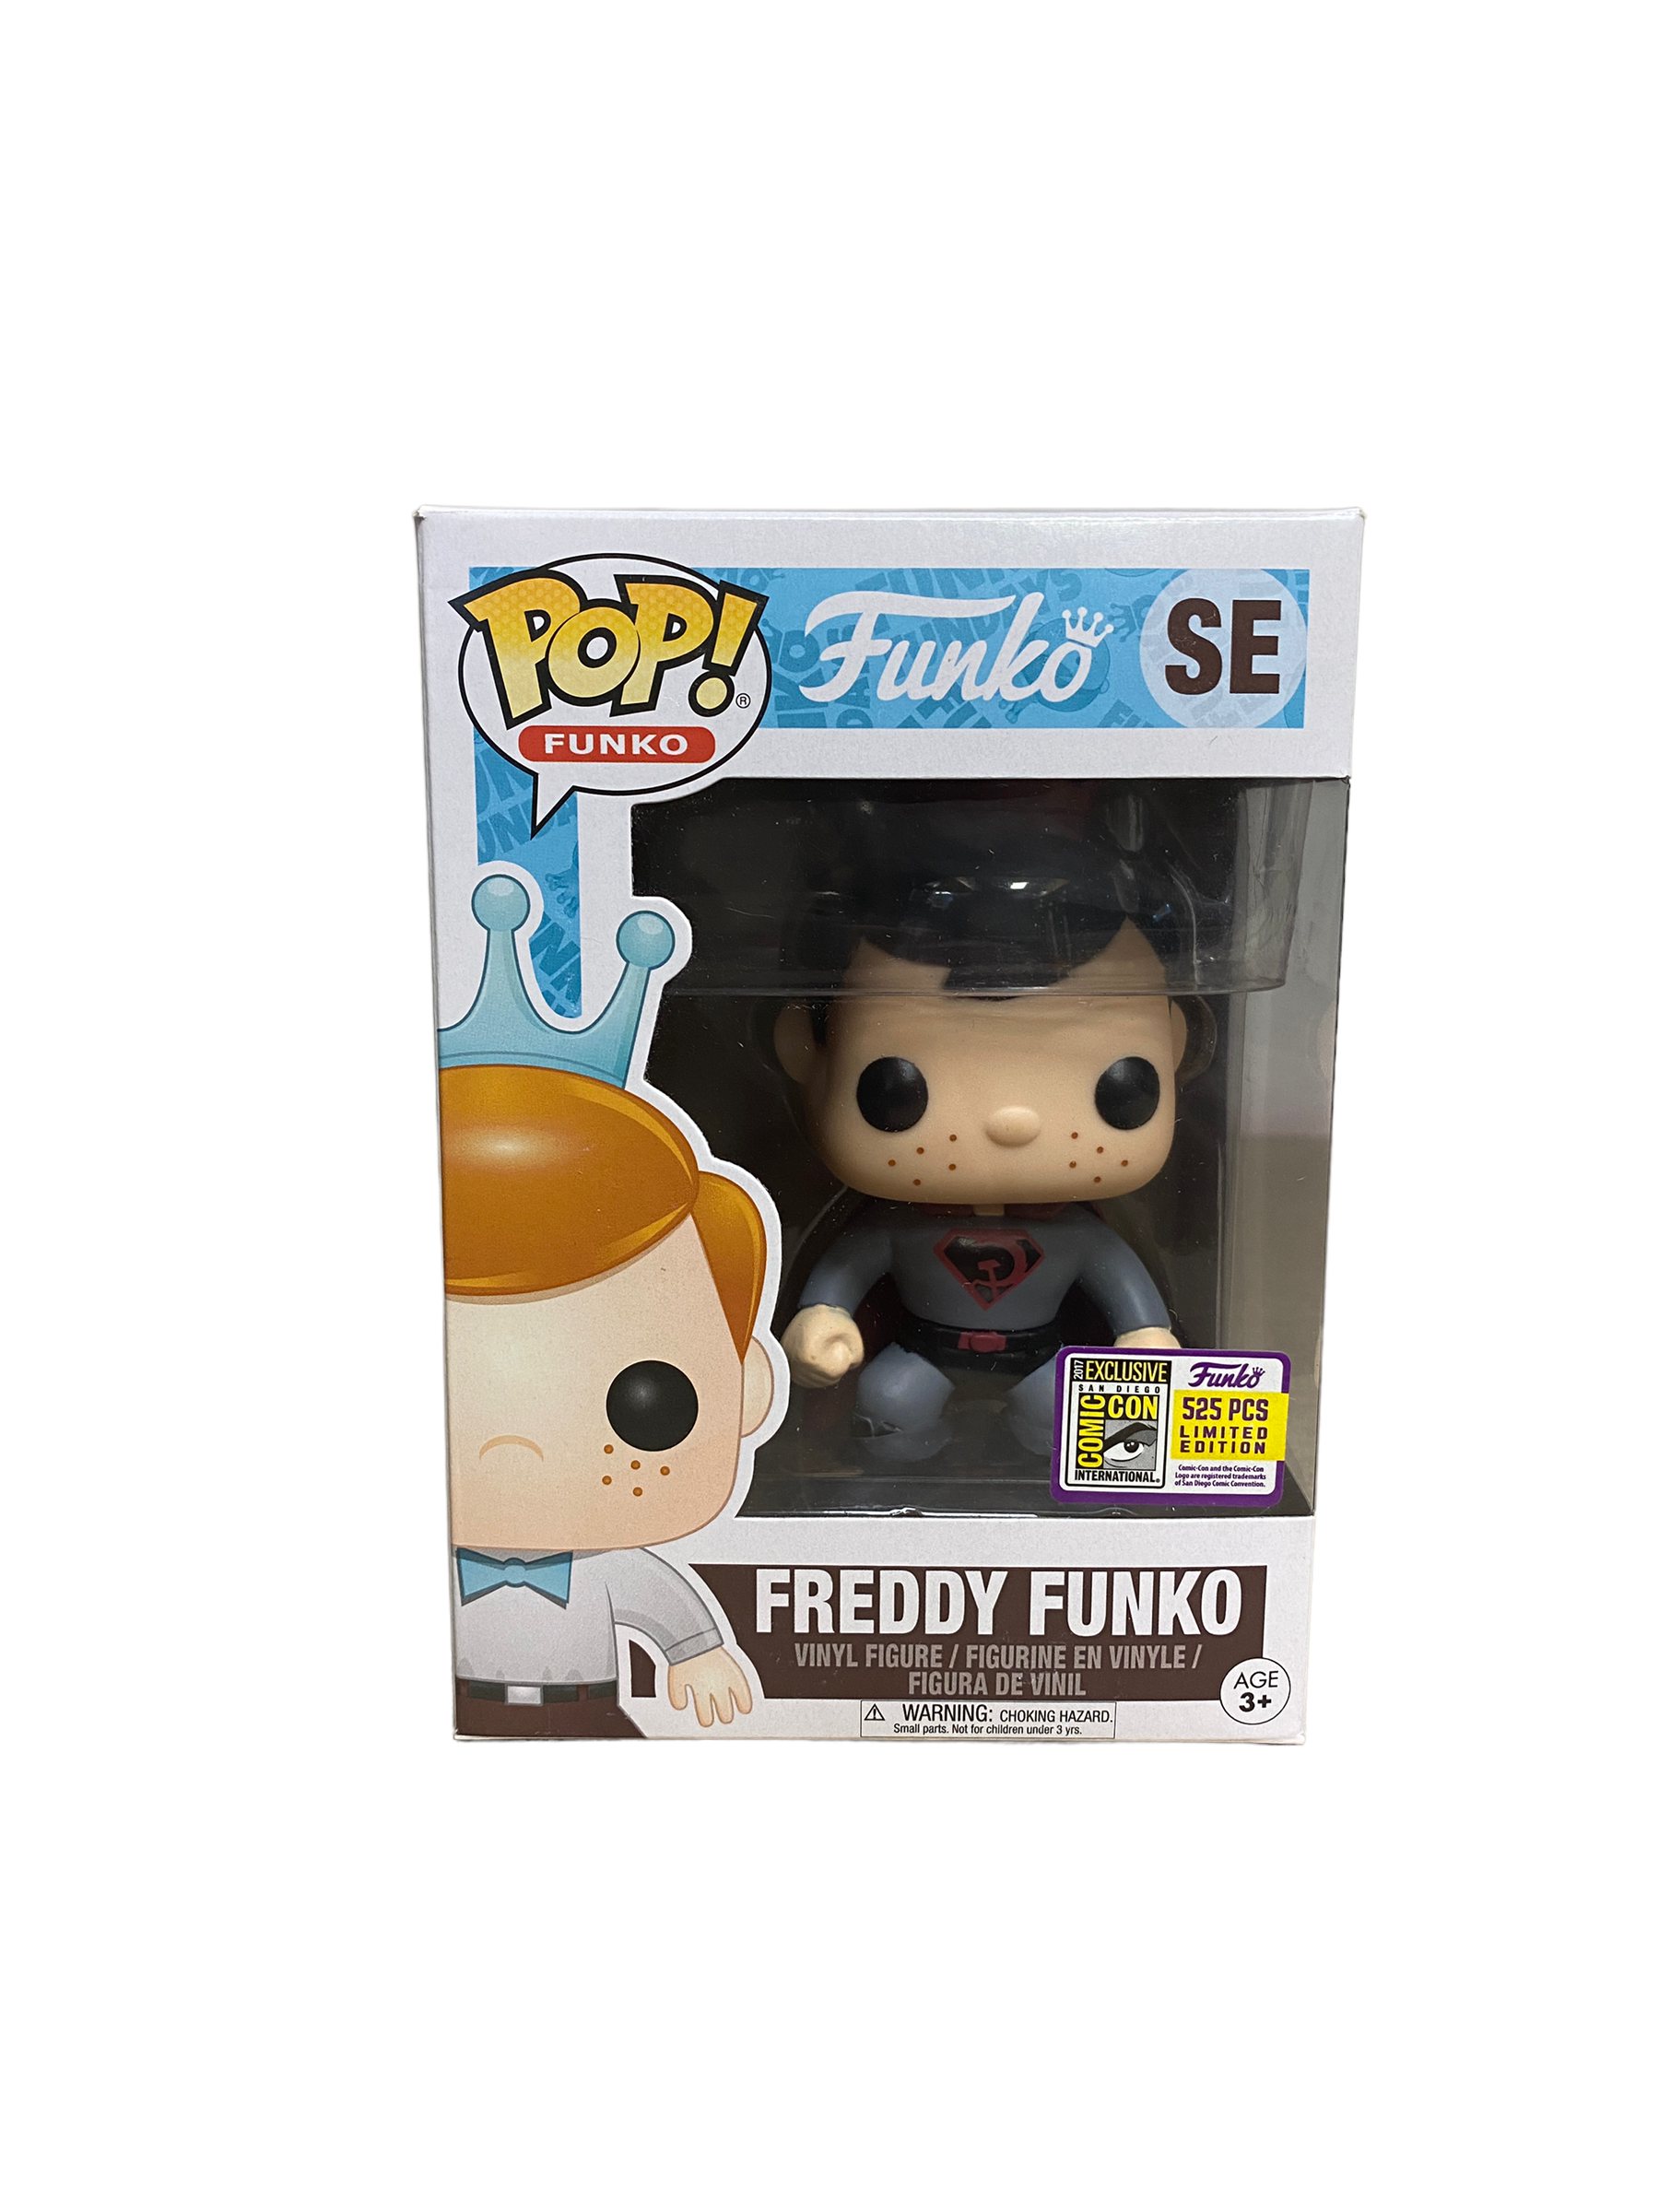 Freddy Funko as Superman Red Son Funko Pop! - SDCC 2017 Exclusive LE525 Pcs - Condition 8.75/10